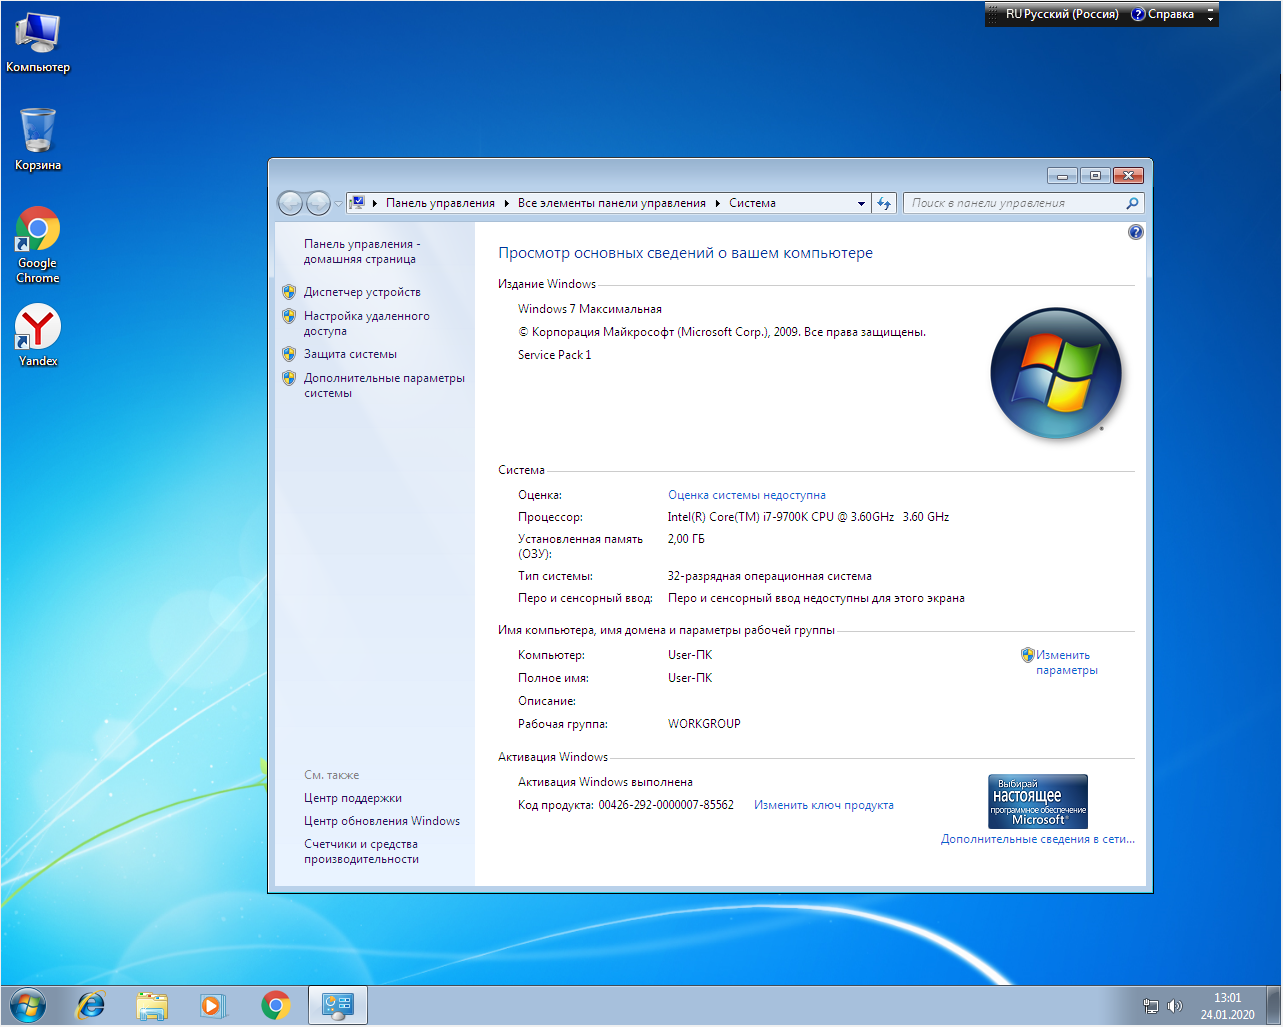 Windows 7 32 usb. Ядер процессора 1 для Windows 7 32 бит. ПК PC 64 бит. Характеристики ПК. Параметры компьютера.